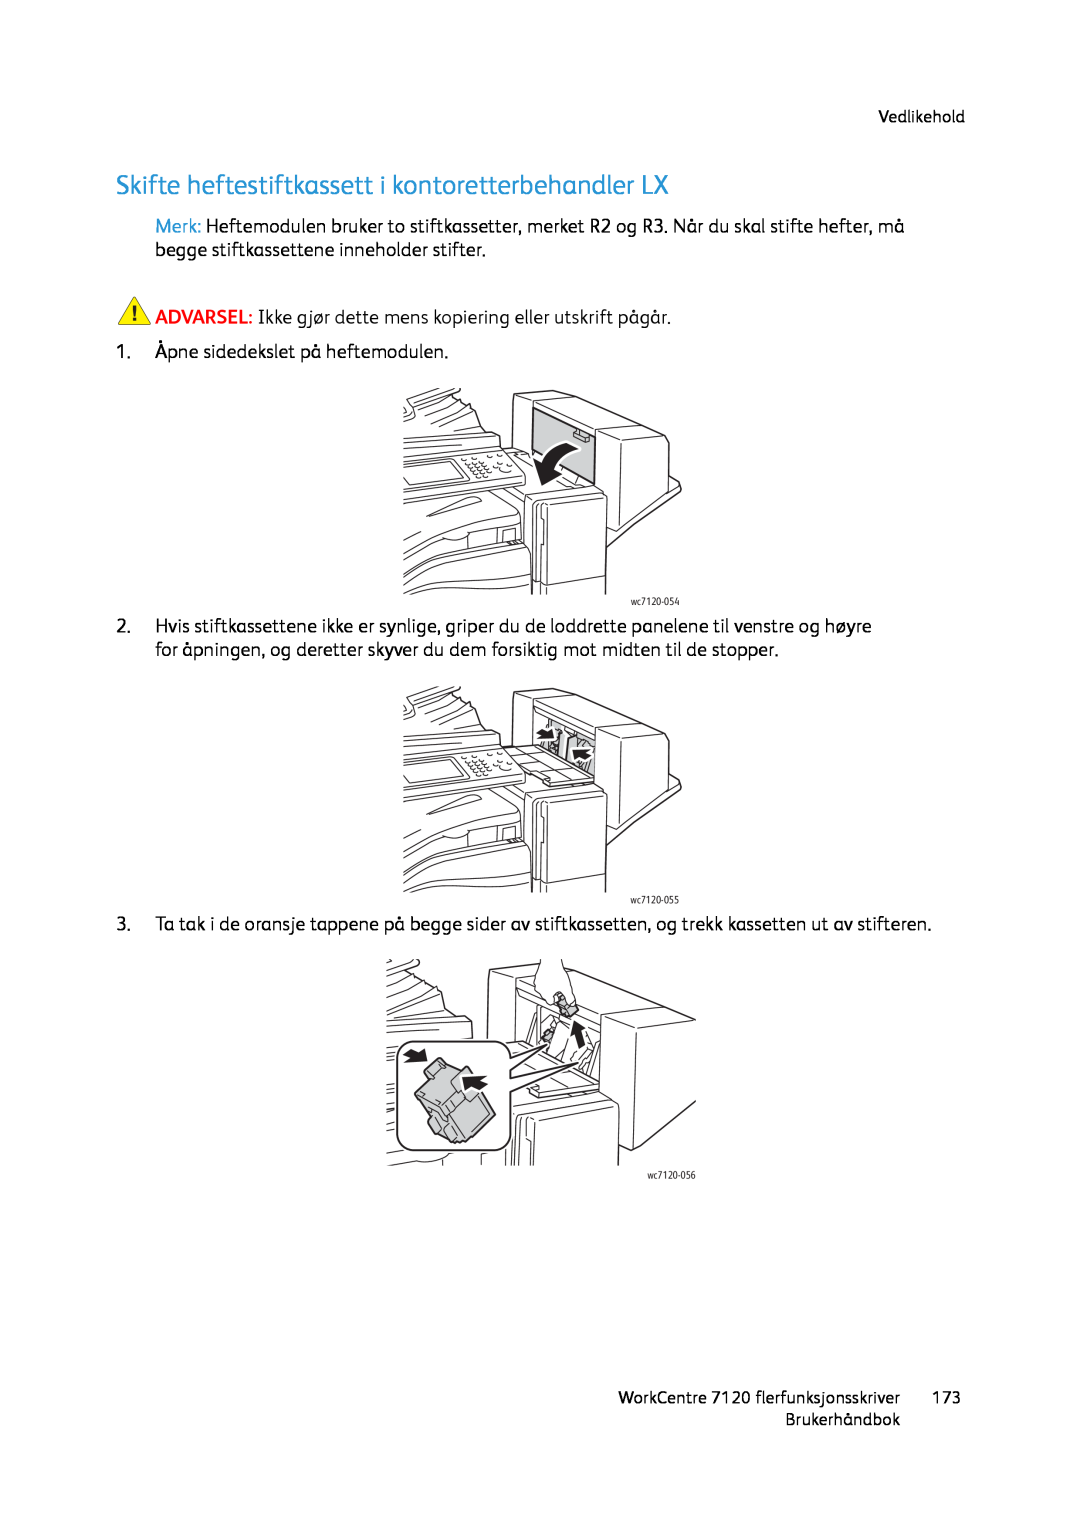 Xerox manual Skifte heftestiftkassett i kontoretterbehandler LX, wc7120-054, wc7120-055, wc7120-056 